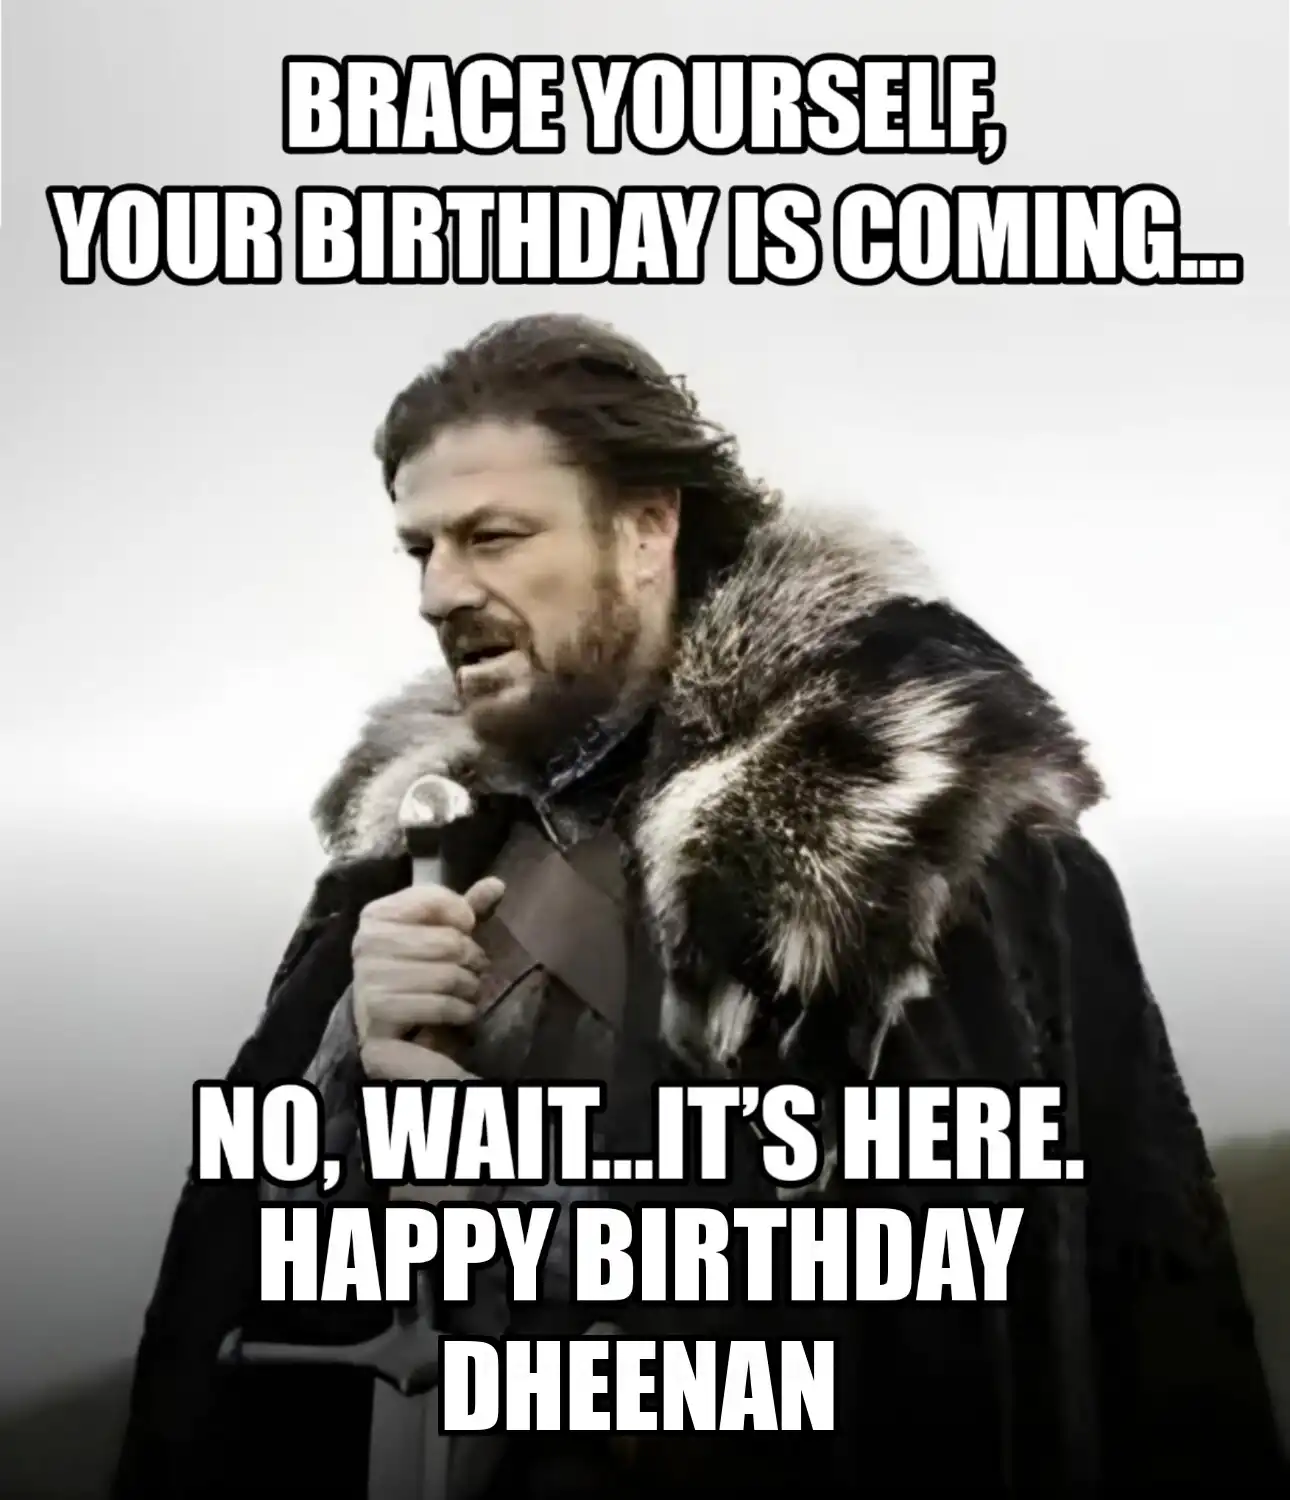 Happy Birthday Dheenan Brace Yourself Your Birthday Is Coming Meme